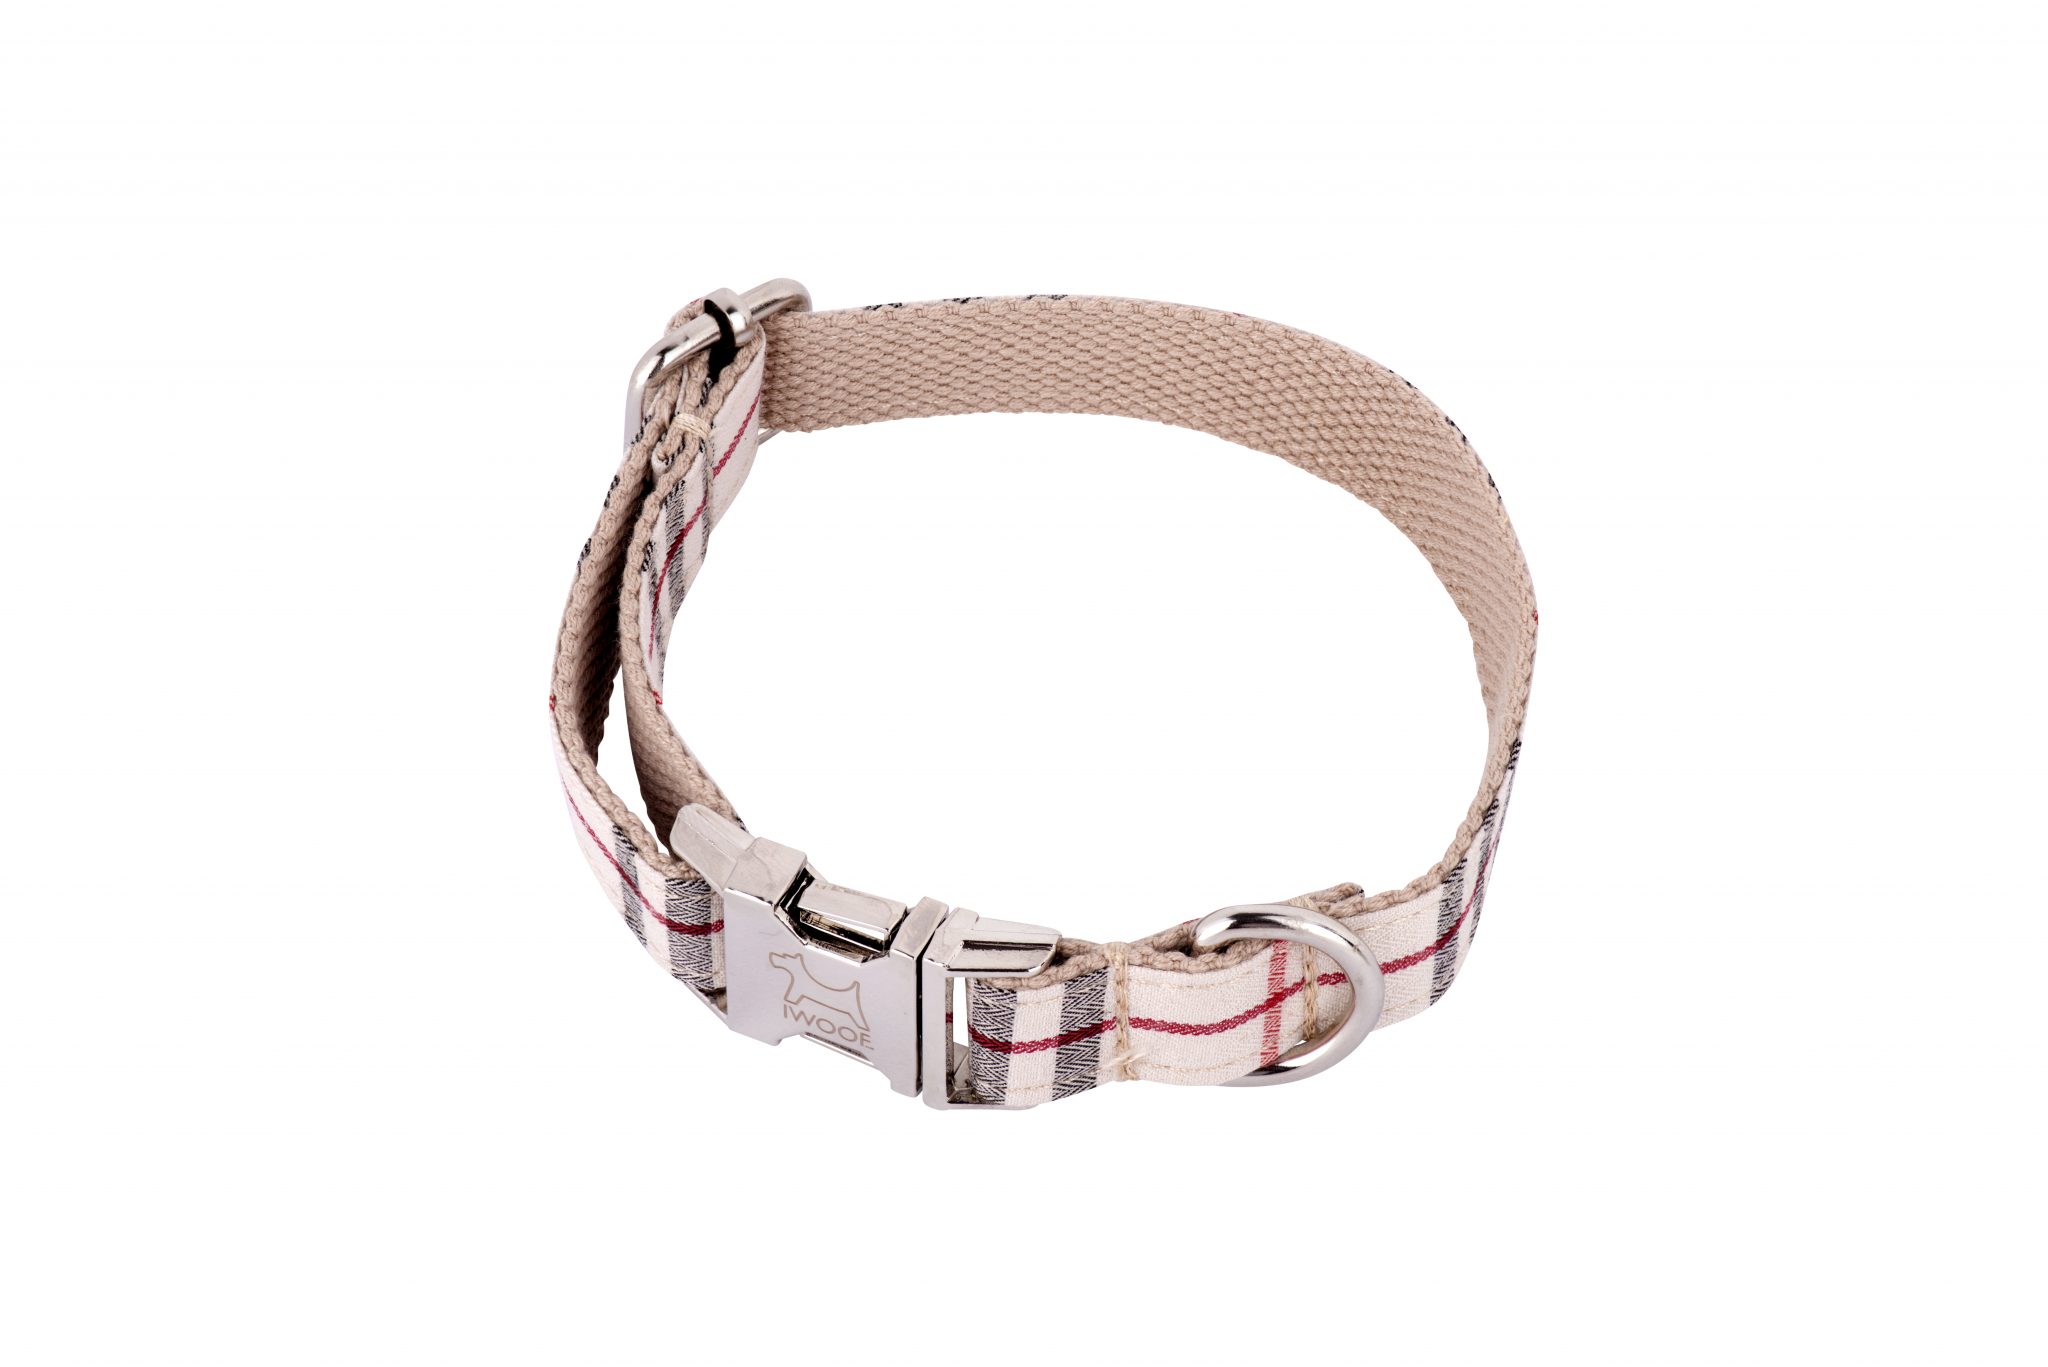 Cambridge tweed designer dog collar by IWOOF